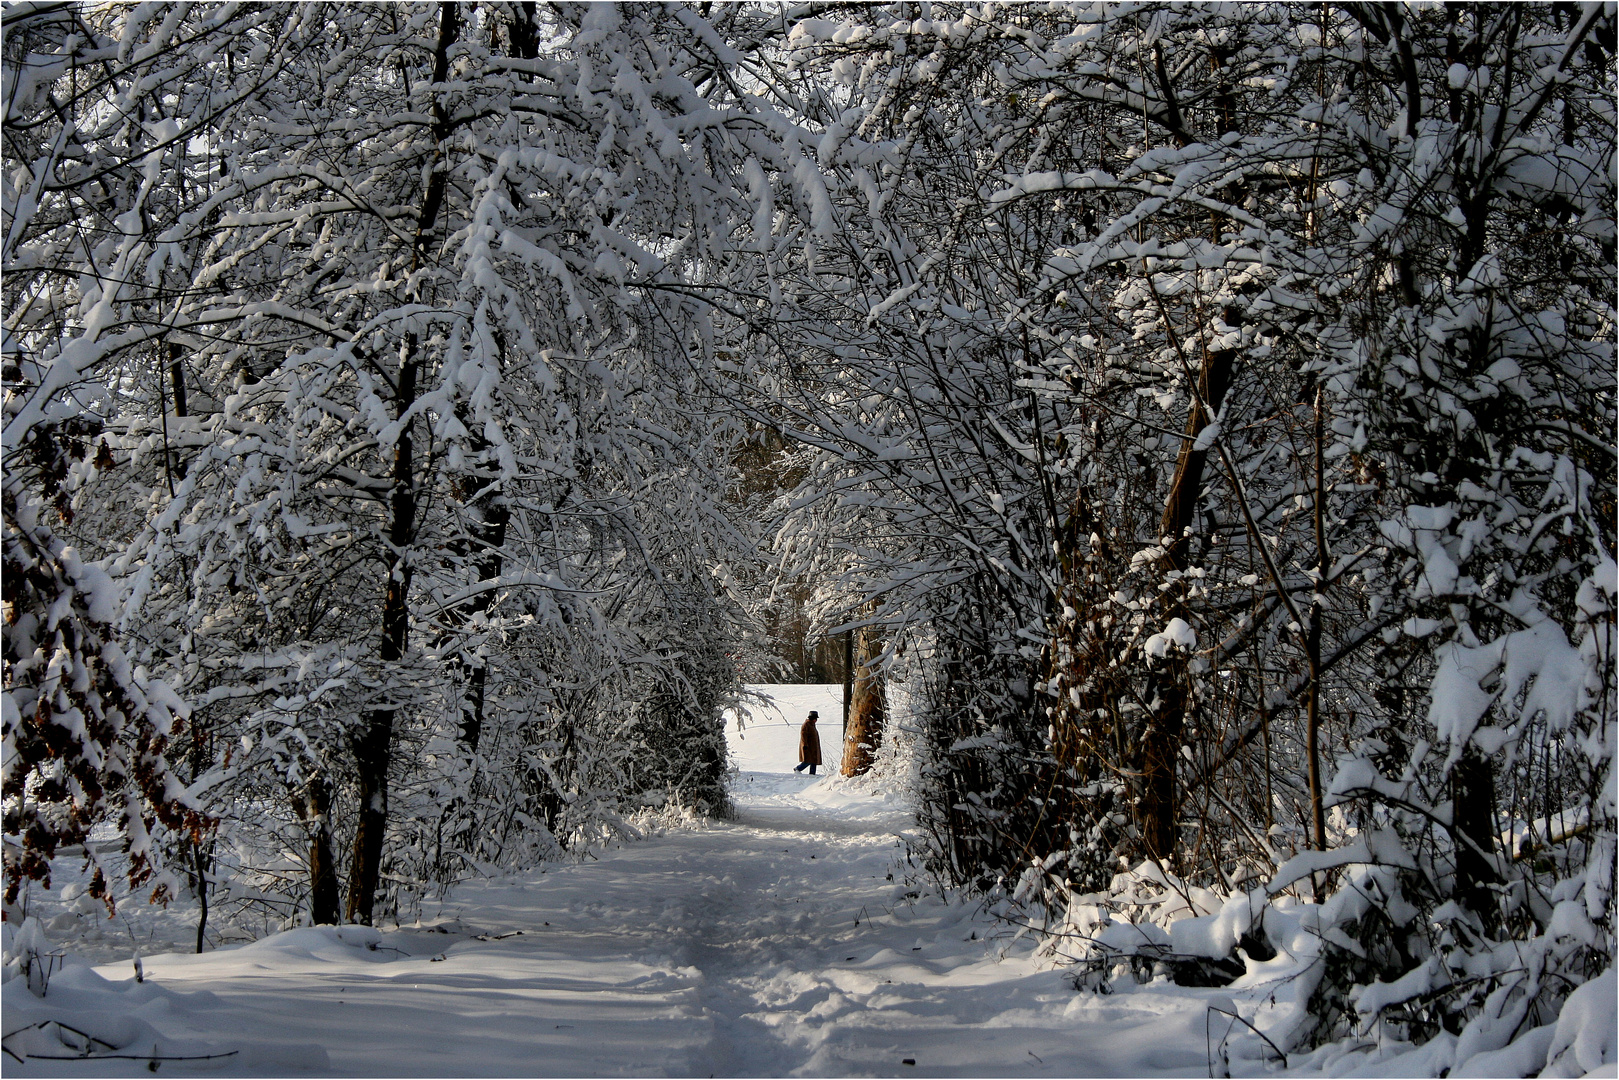 walking in the winter wonderland